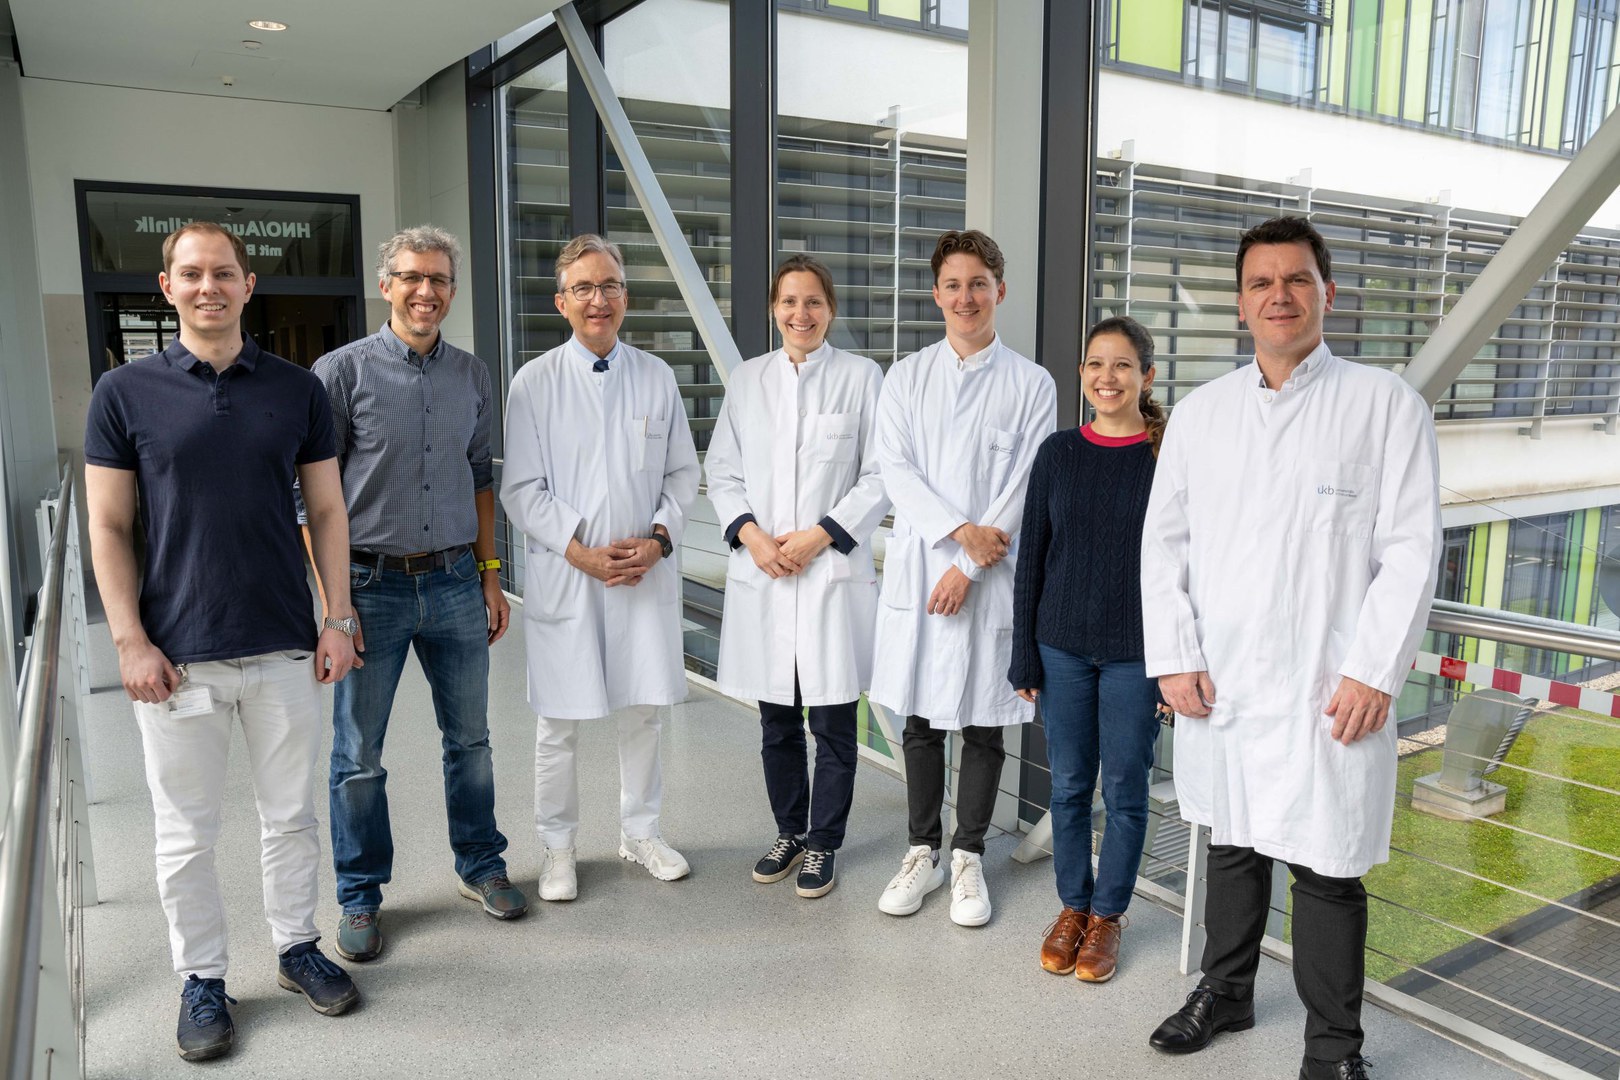 Researching macular degeneration together (from left) - Julius Ameln, Dr. Wolf Harmening, Prof. Frank G. Holz, Dr. Marlene Saßmannshausen, Dr. Leon von der Emde, Alessandra Carmichael-Martins, Dr. Thomas Ach